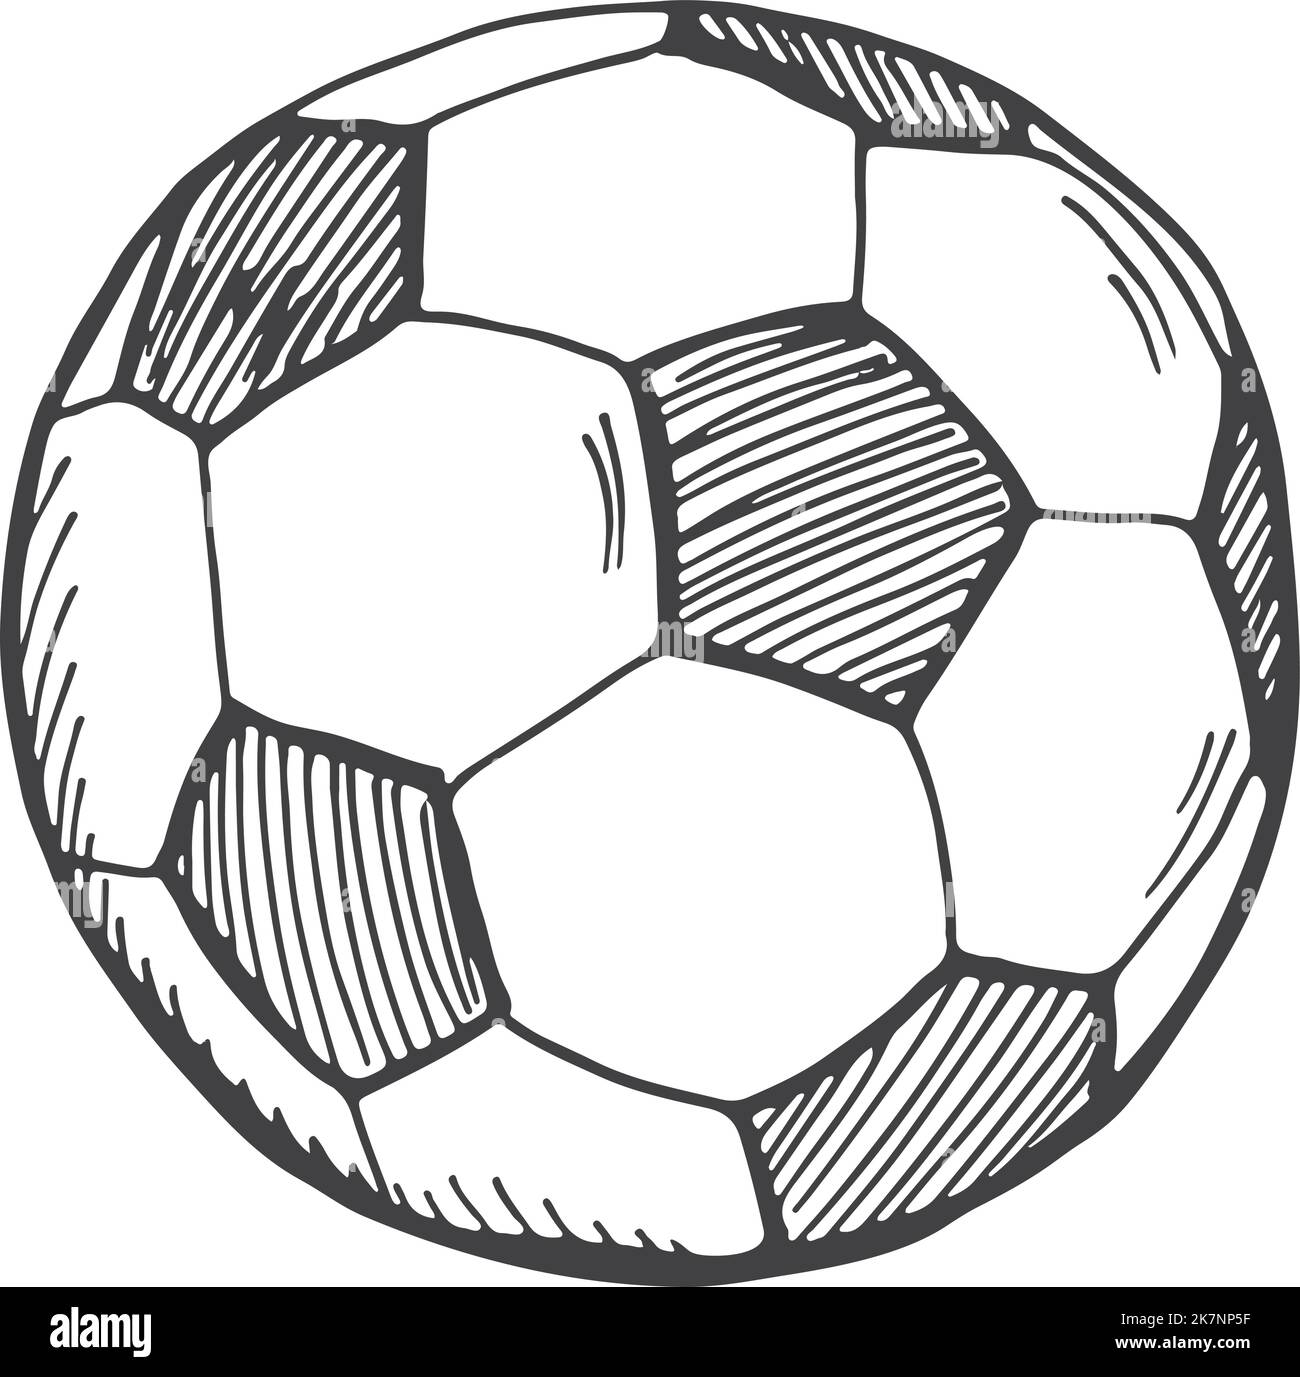 Soccer ball sketch. Football symbol. Sport game icon Stock Vector